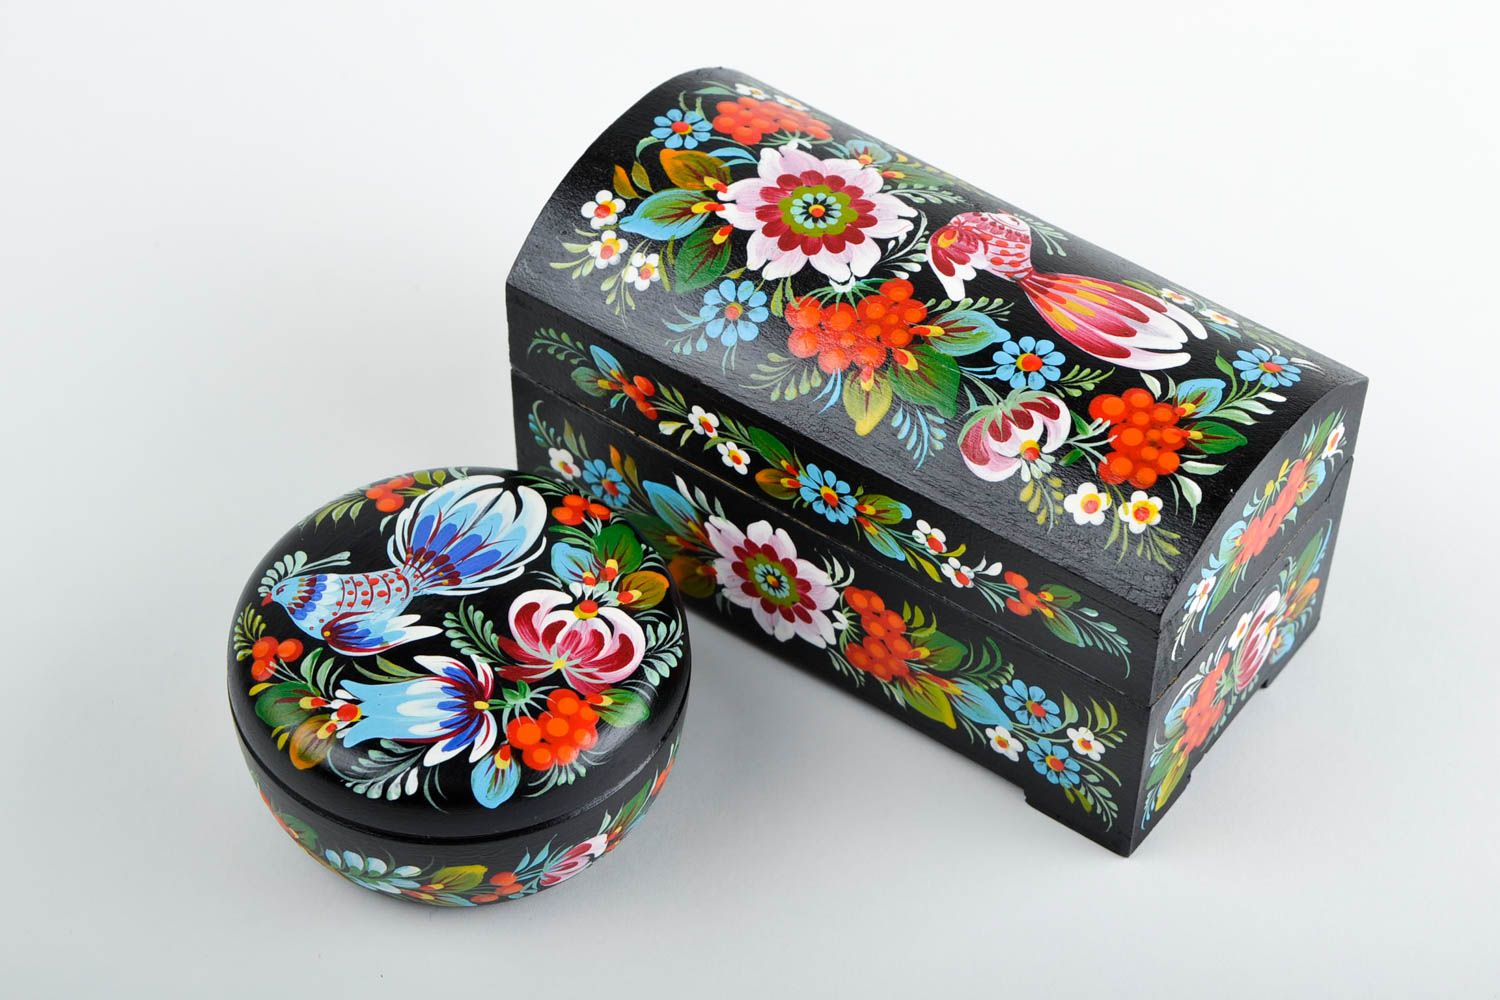 Handmade jewelry box set of 2 items designer box for accessories gift ideas photo 5